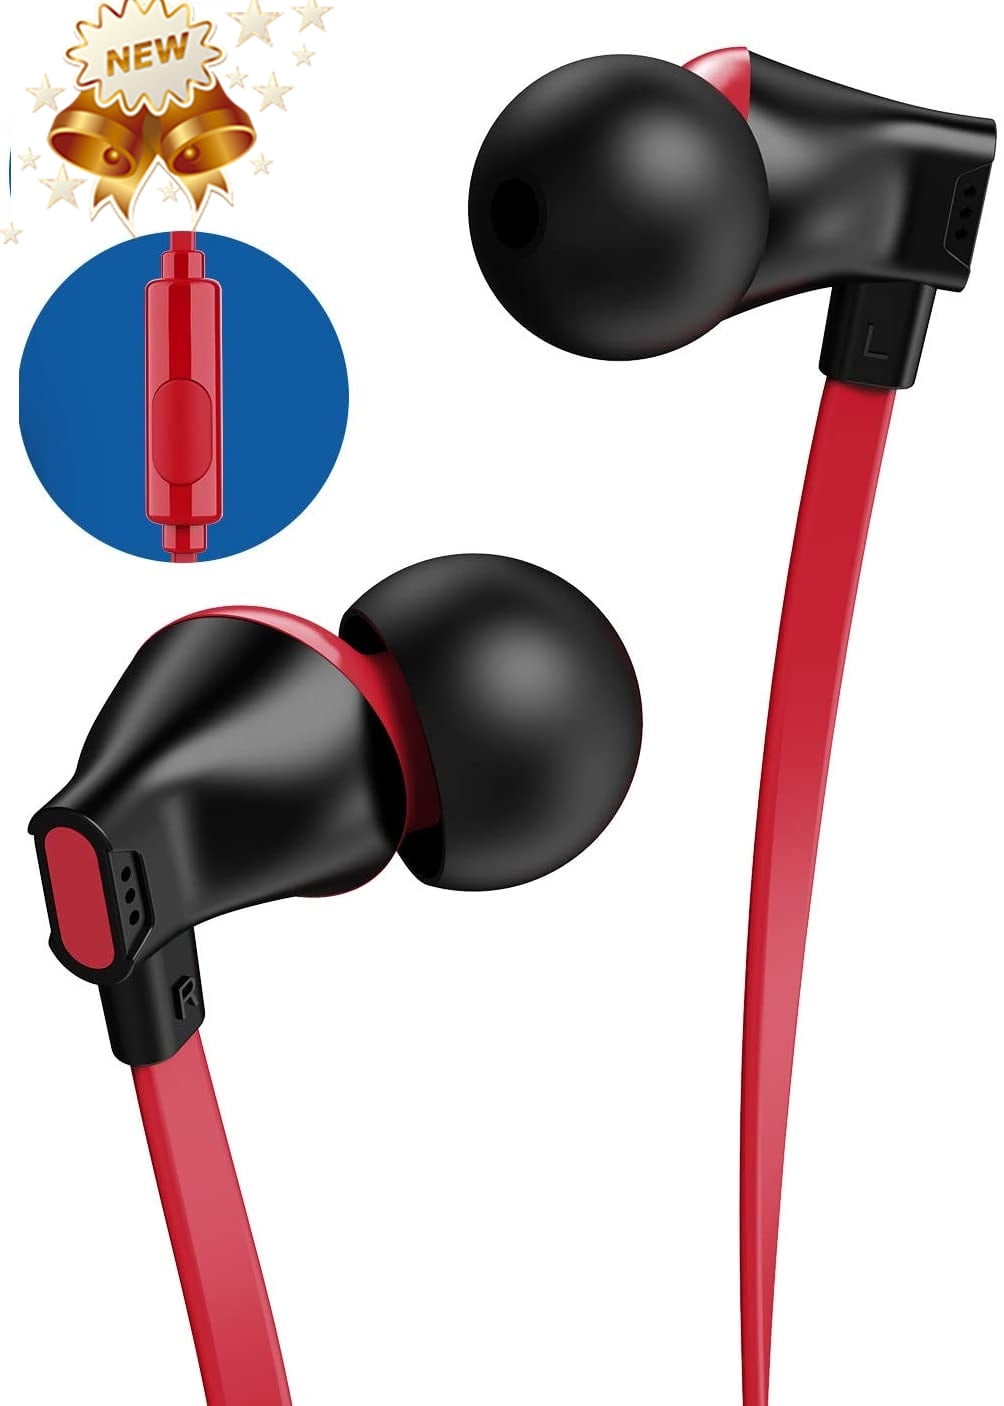 Wired-Earbuds-Earphones-Headphones-Microphone,Ergonomic Earphone with Mic Black Red